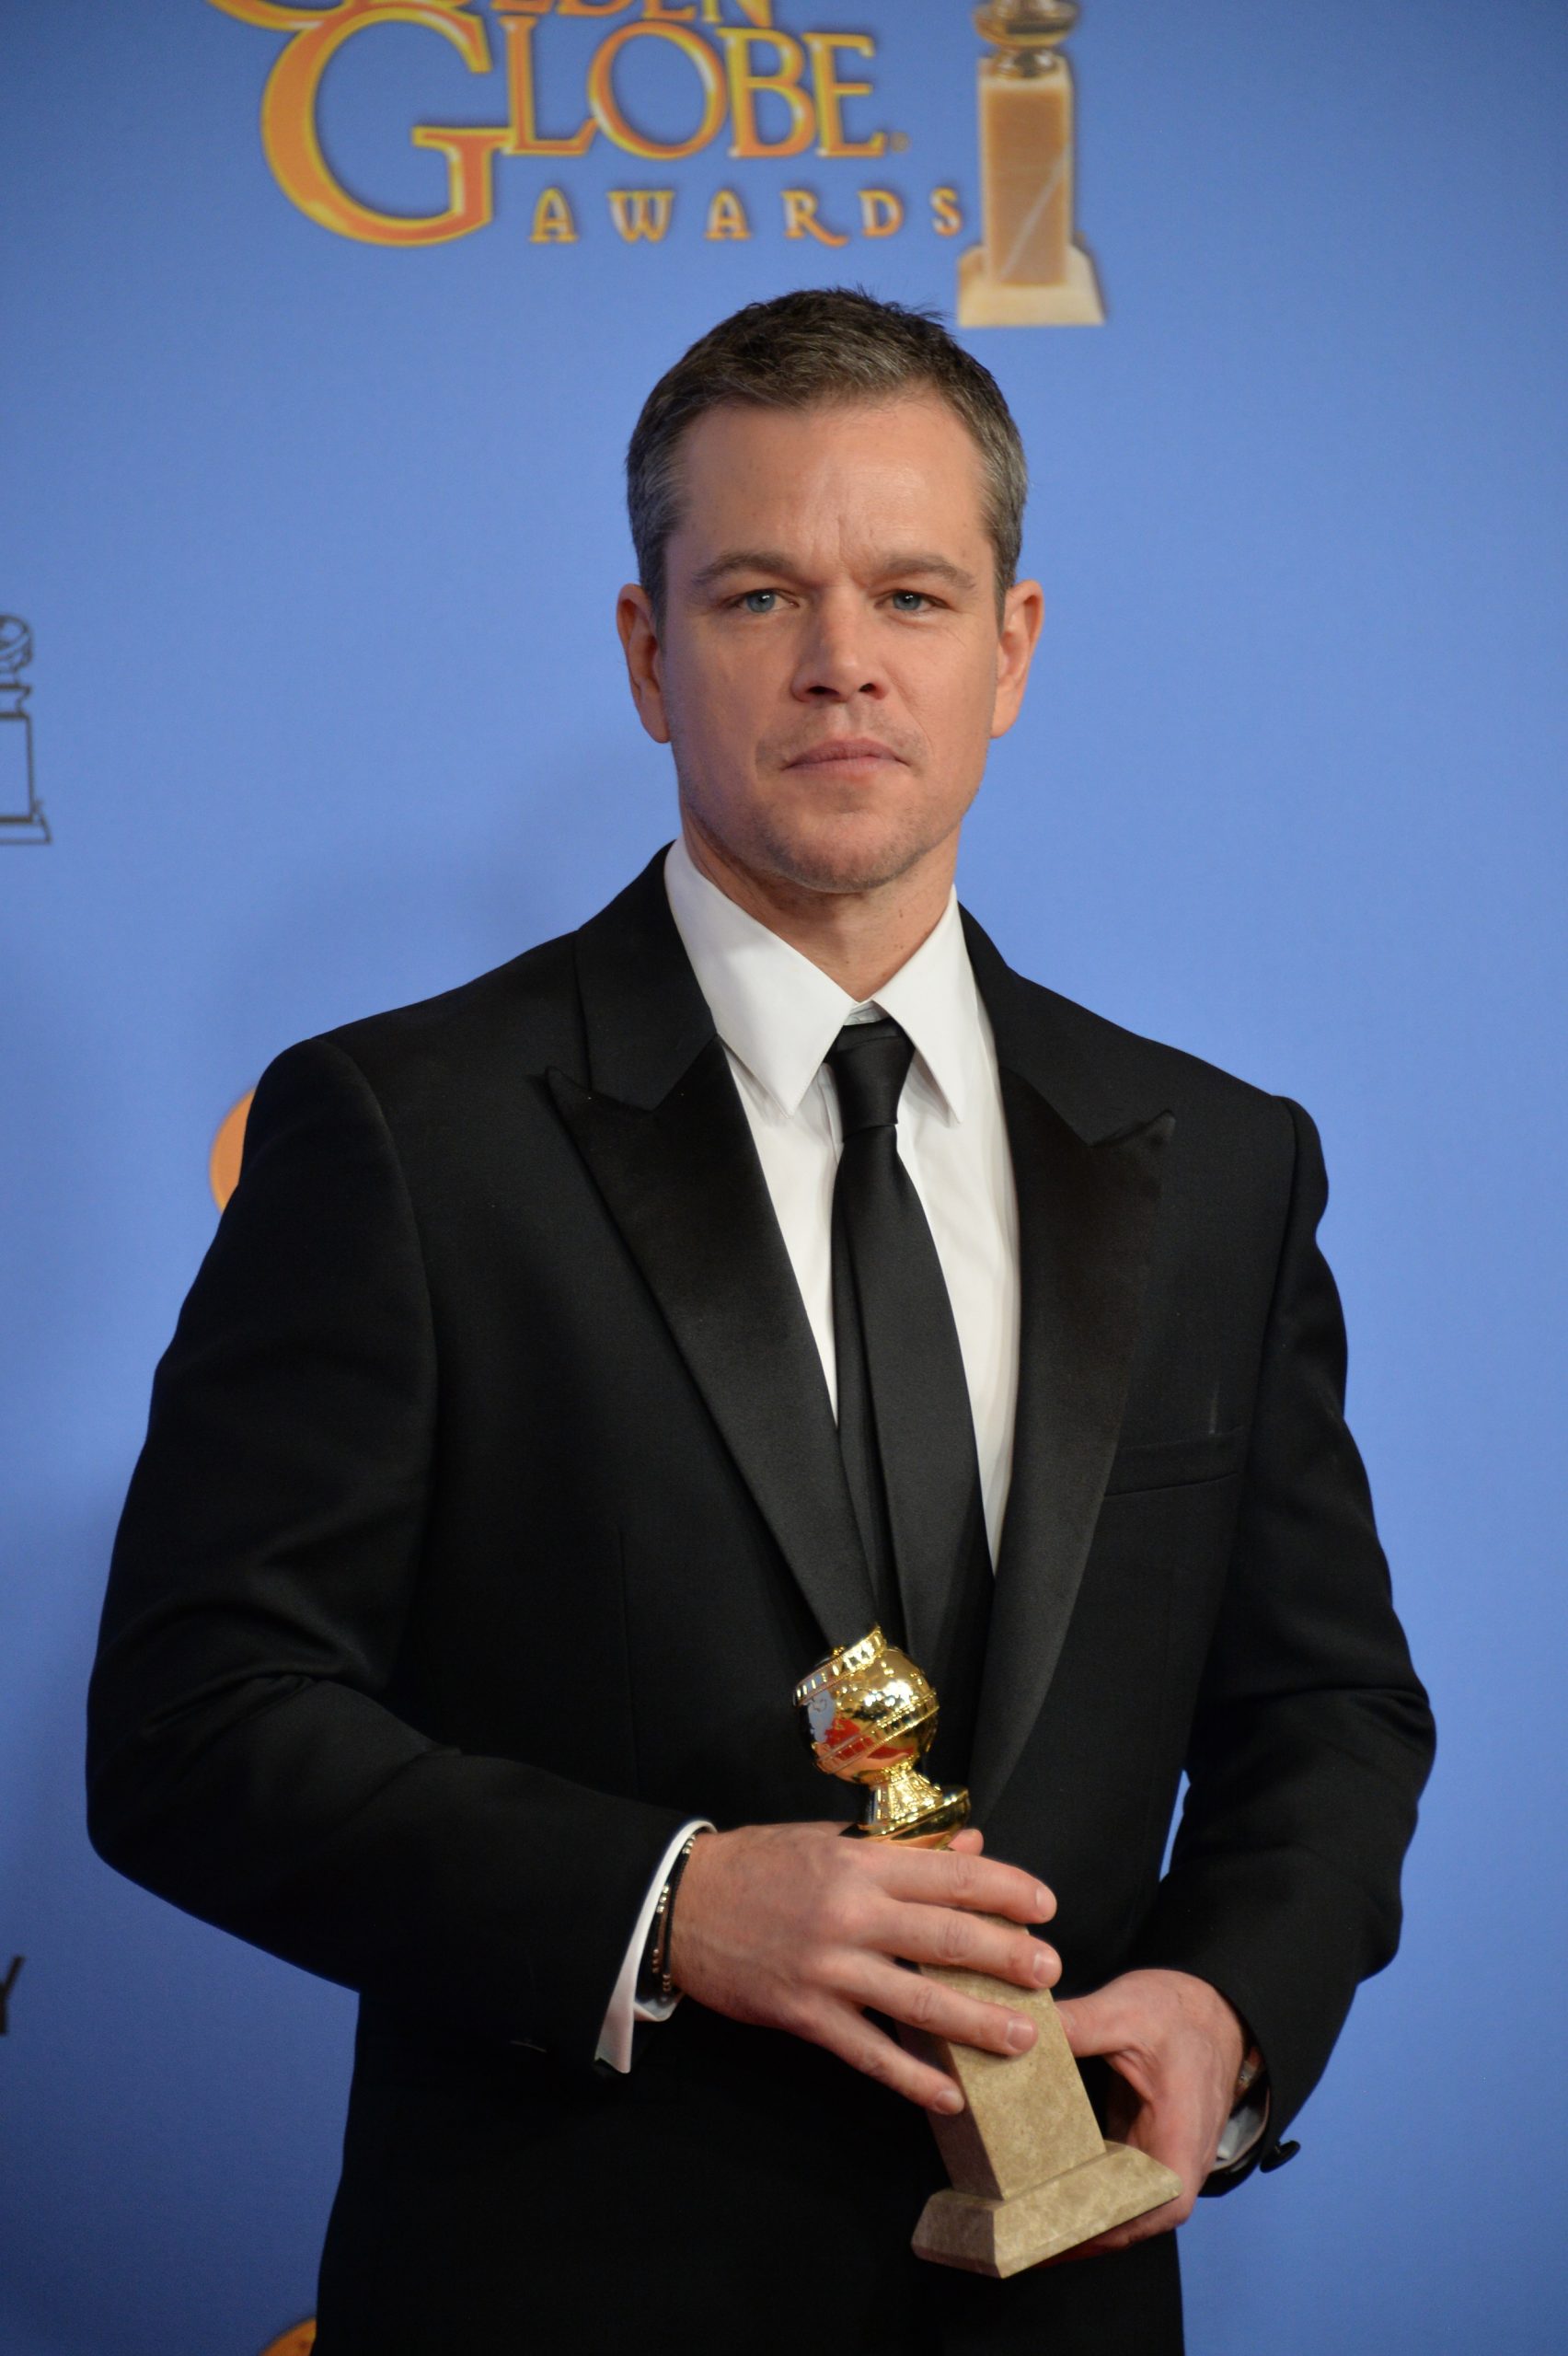 Matt Damon holding a Golden Globe